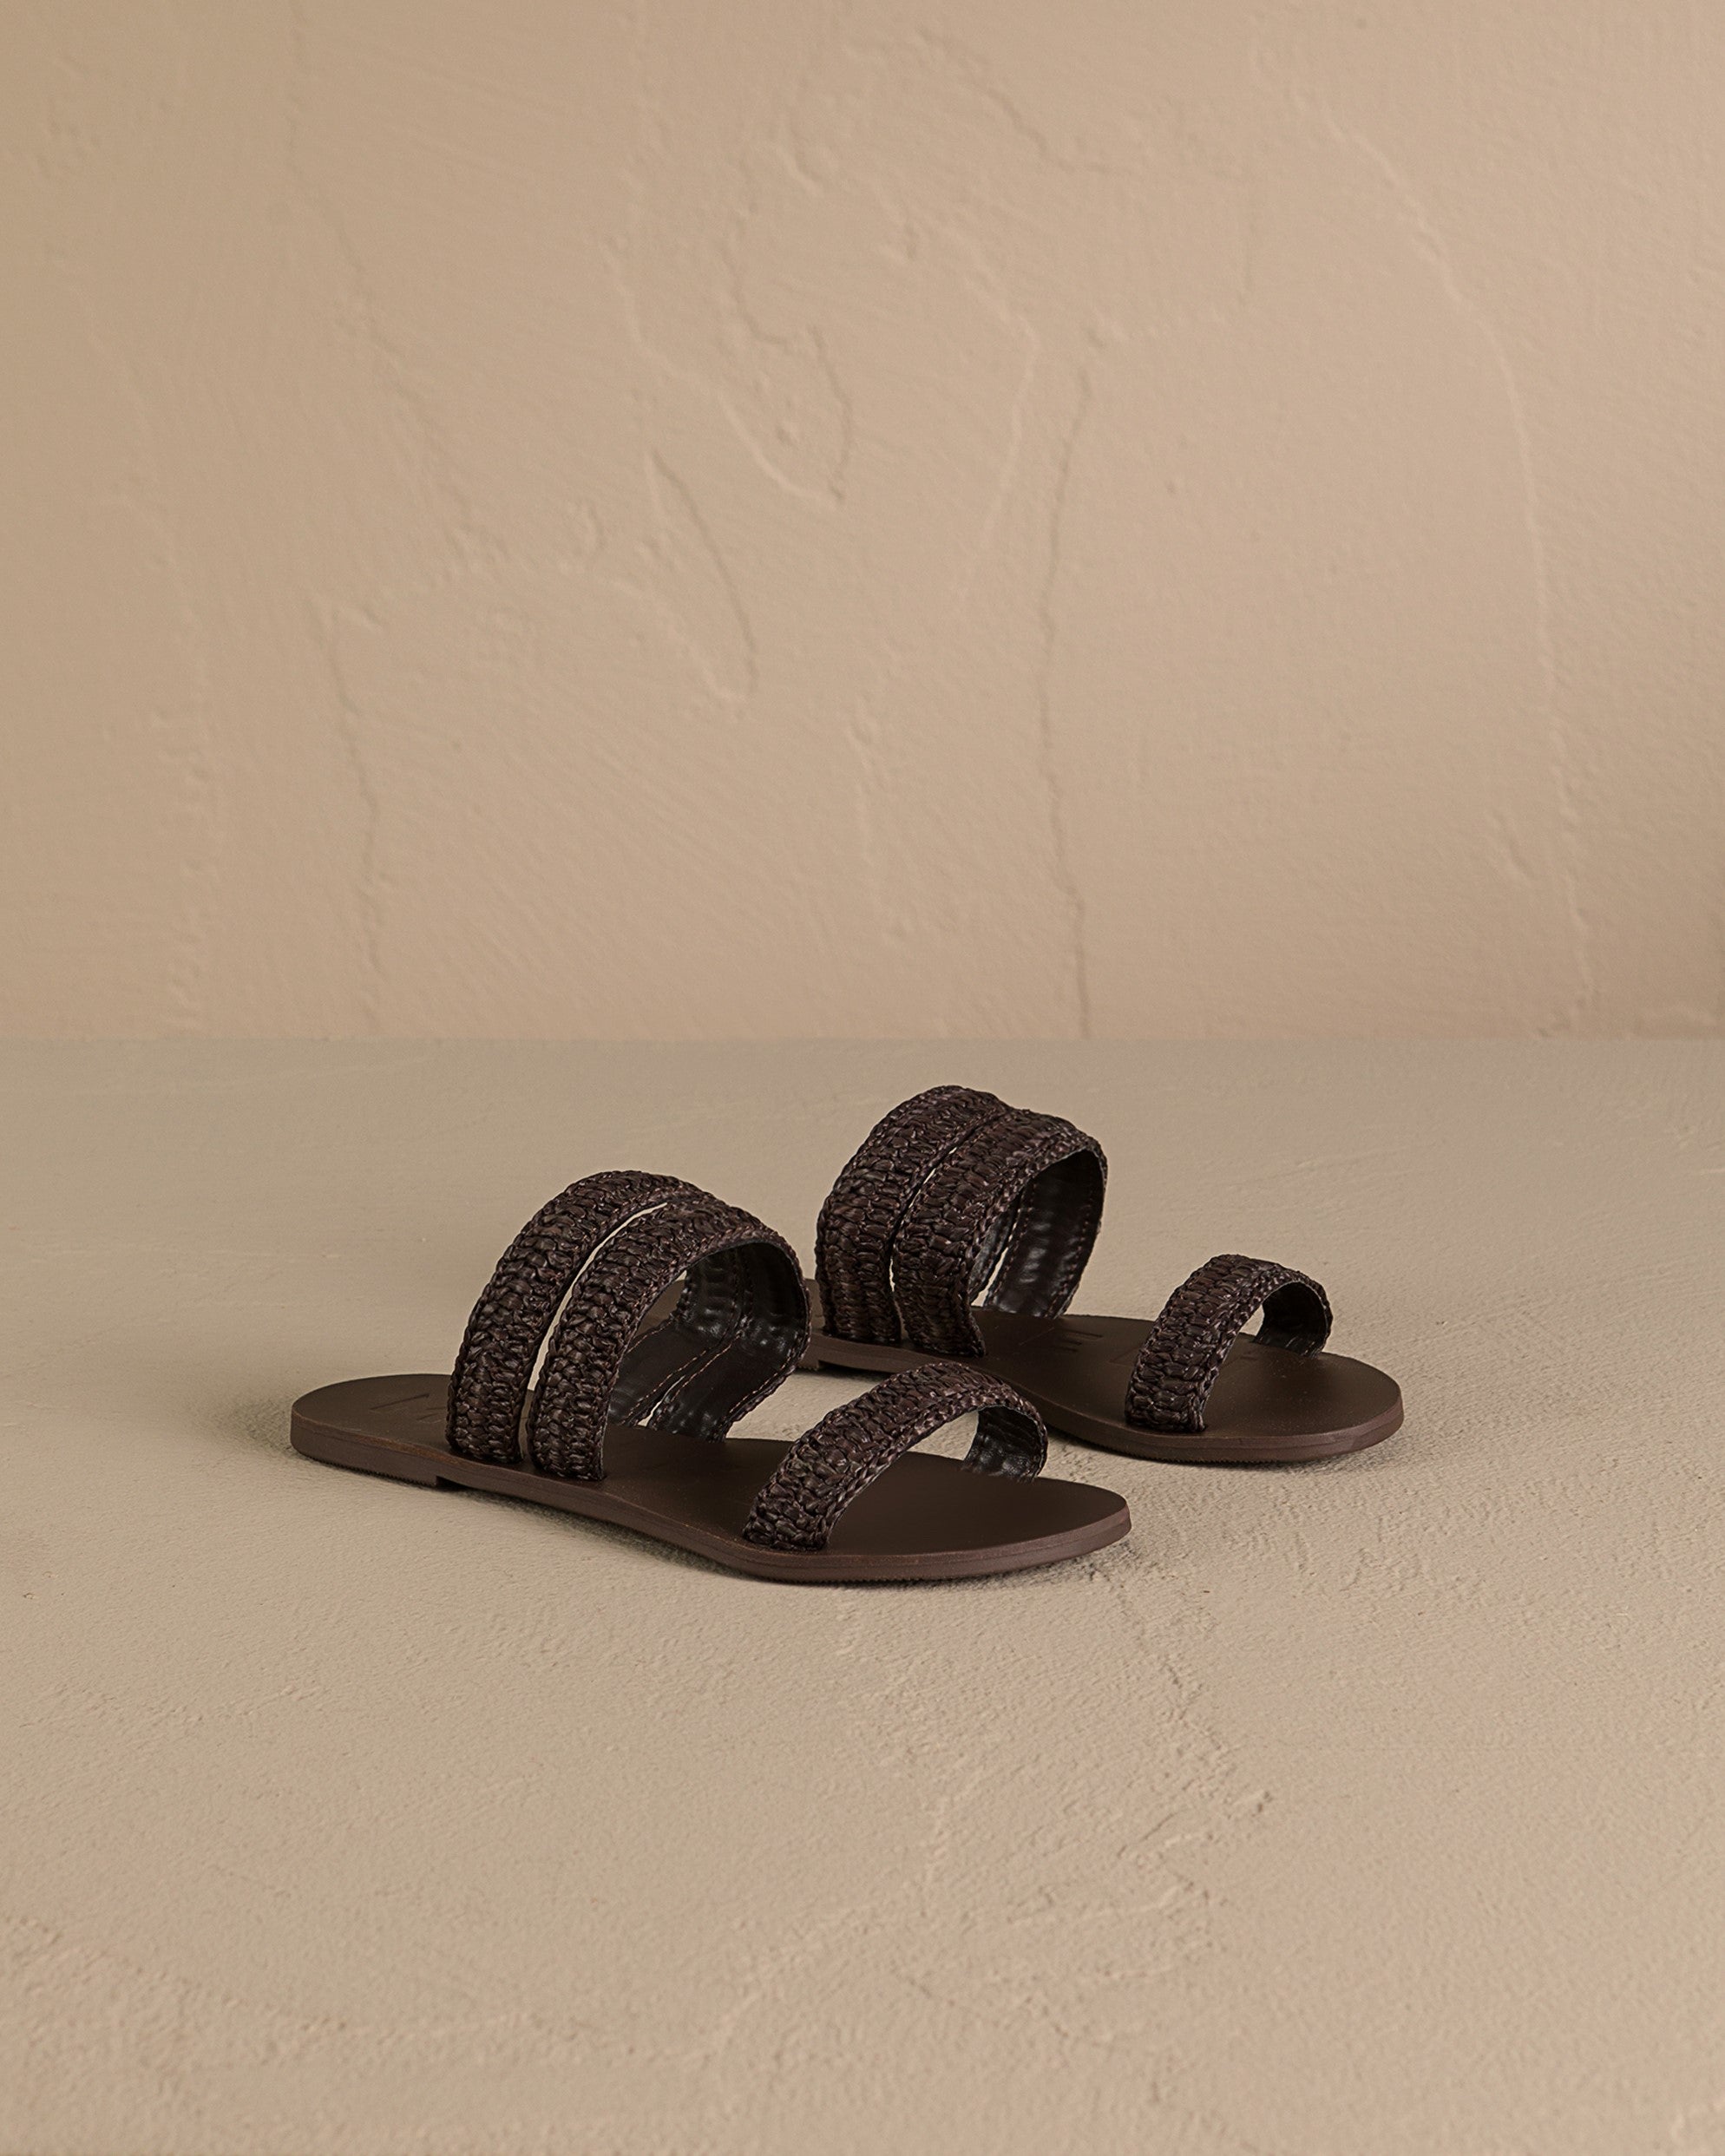 Raffia Stripes Leather|Three Bands Sandals - Cocoa